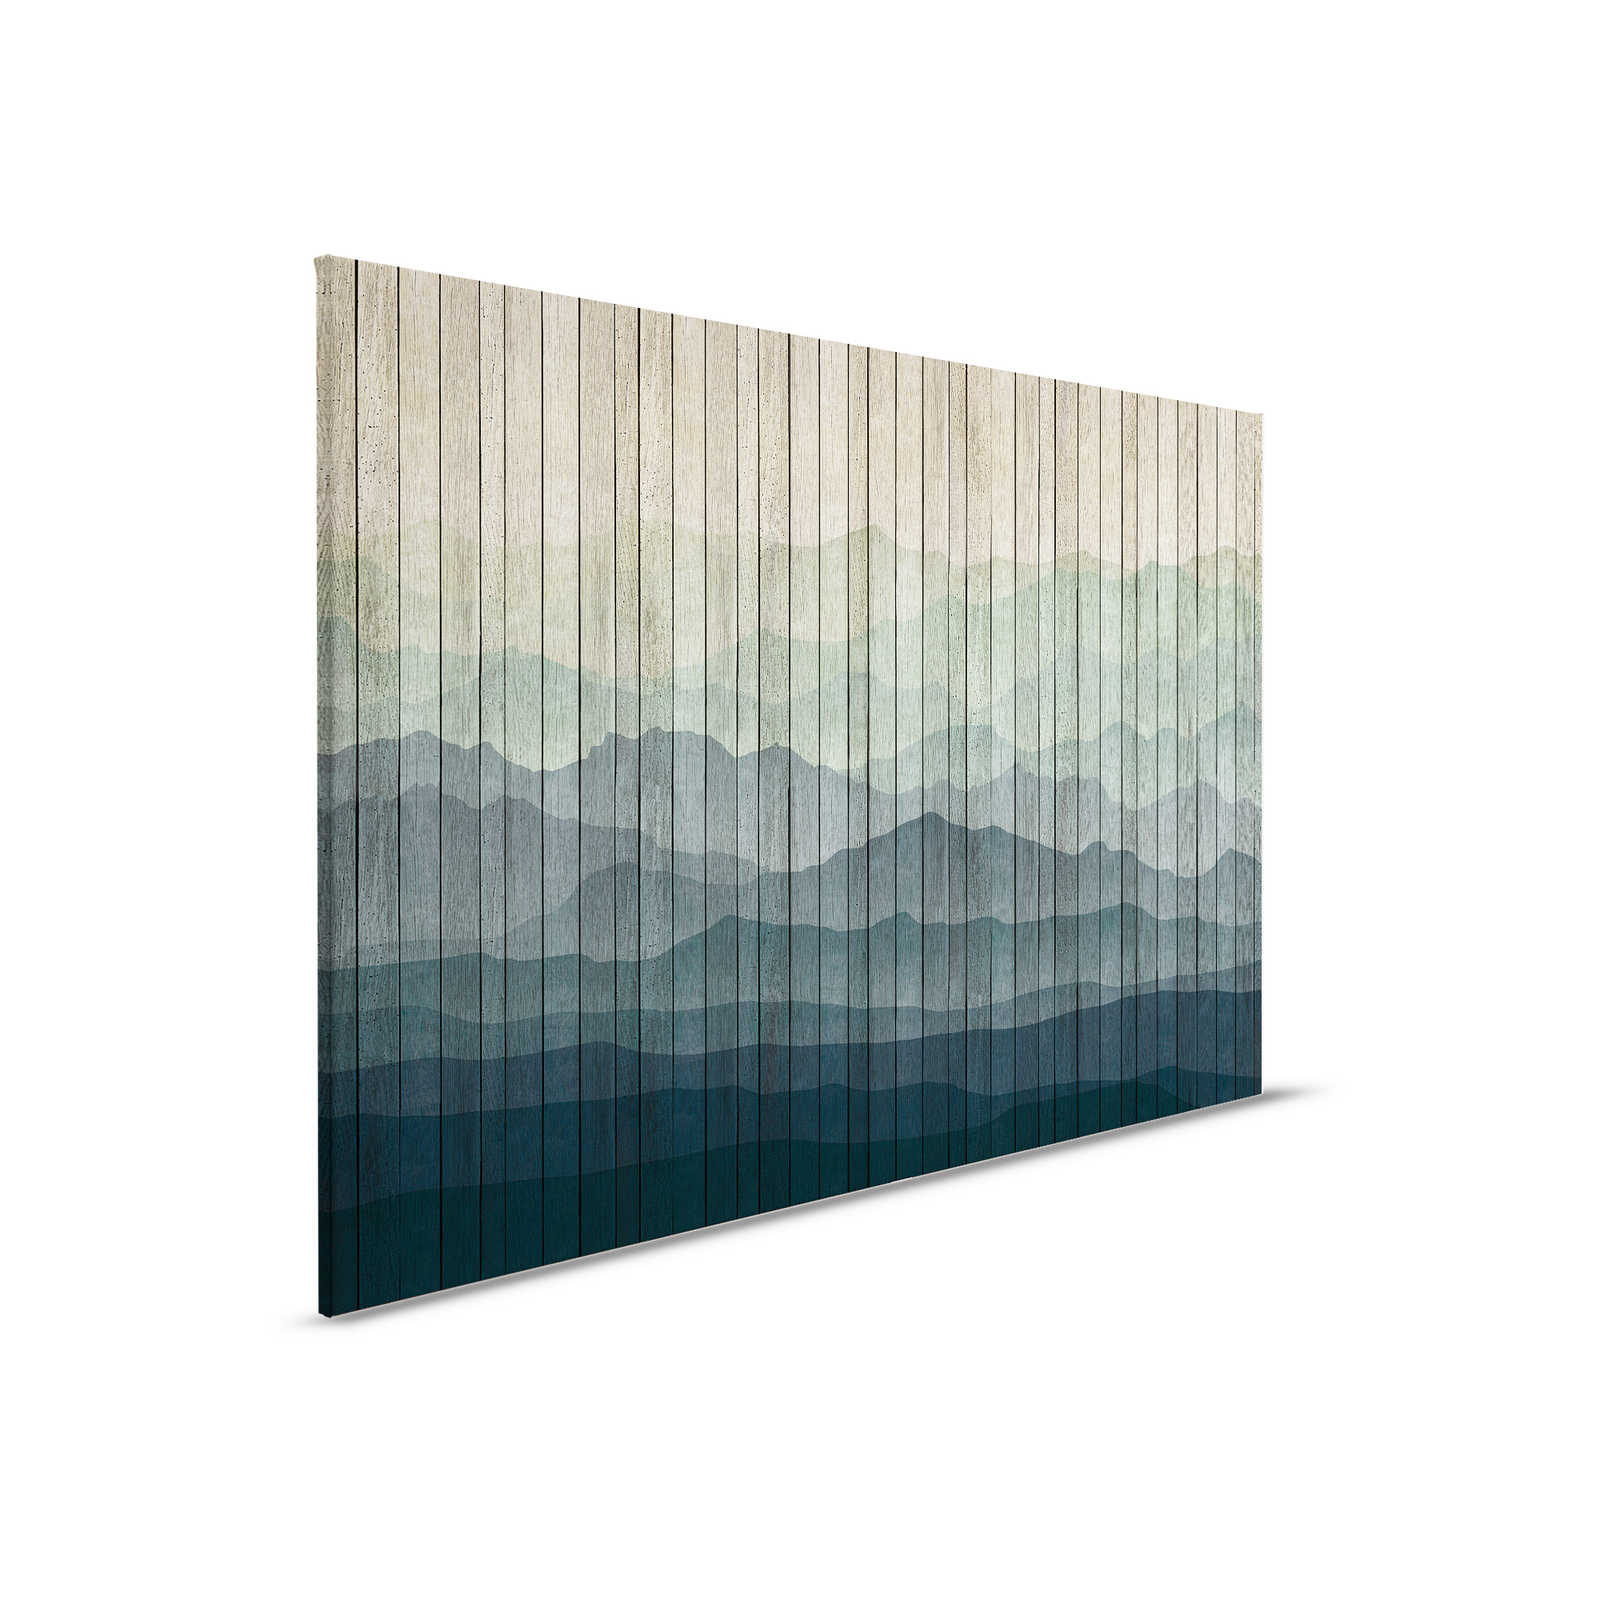 Mountains 1 - modern canvas picture mountain landscape & board optics - 0,90 m x 0,60 m
